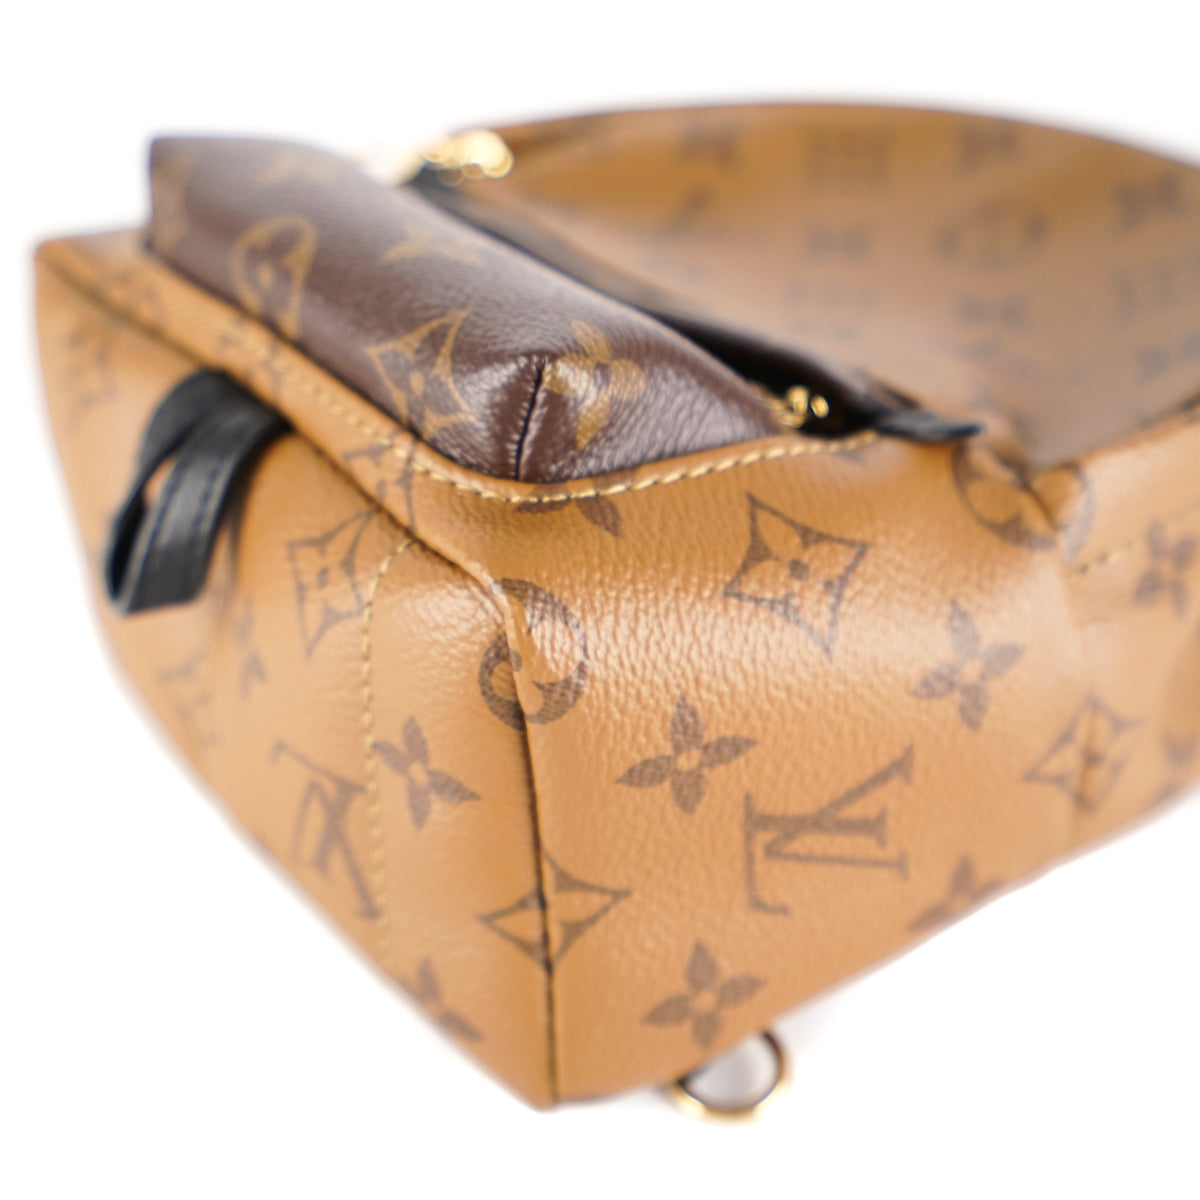 Louis Vuitton Palm Springs Mini Reverse Monogram Backpack Bag - THE PURSE  AFFAIR